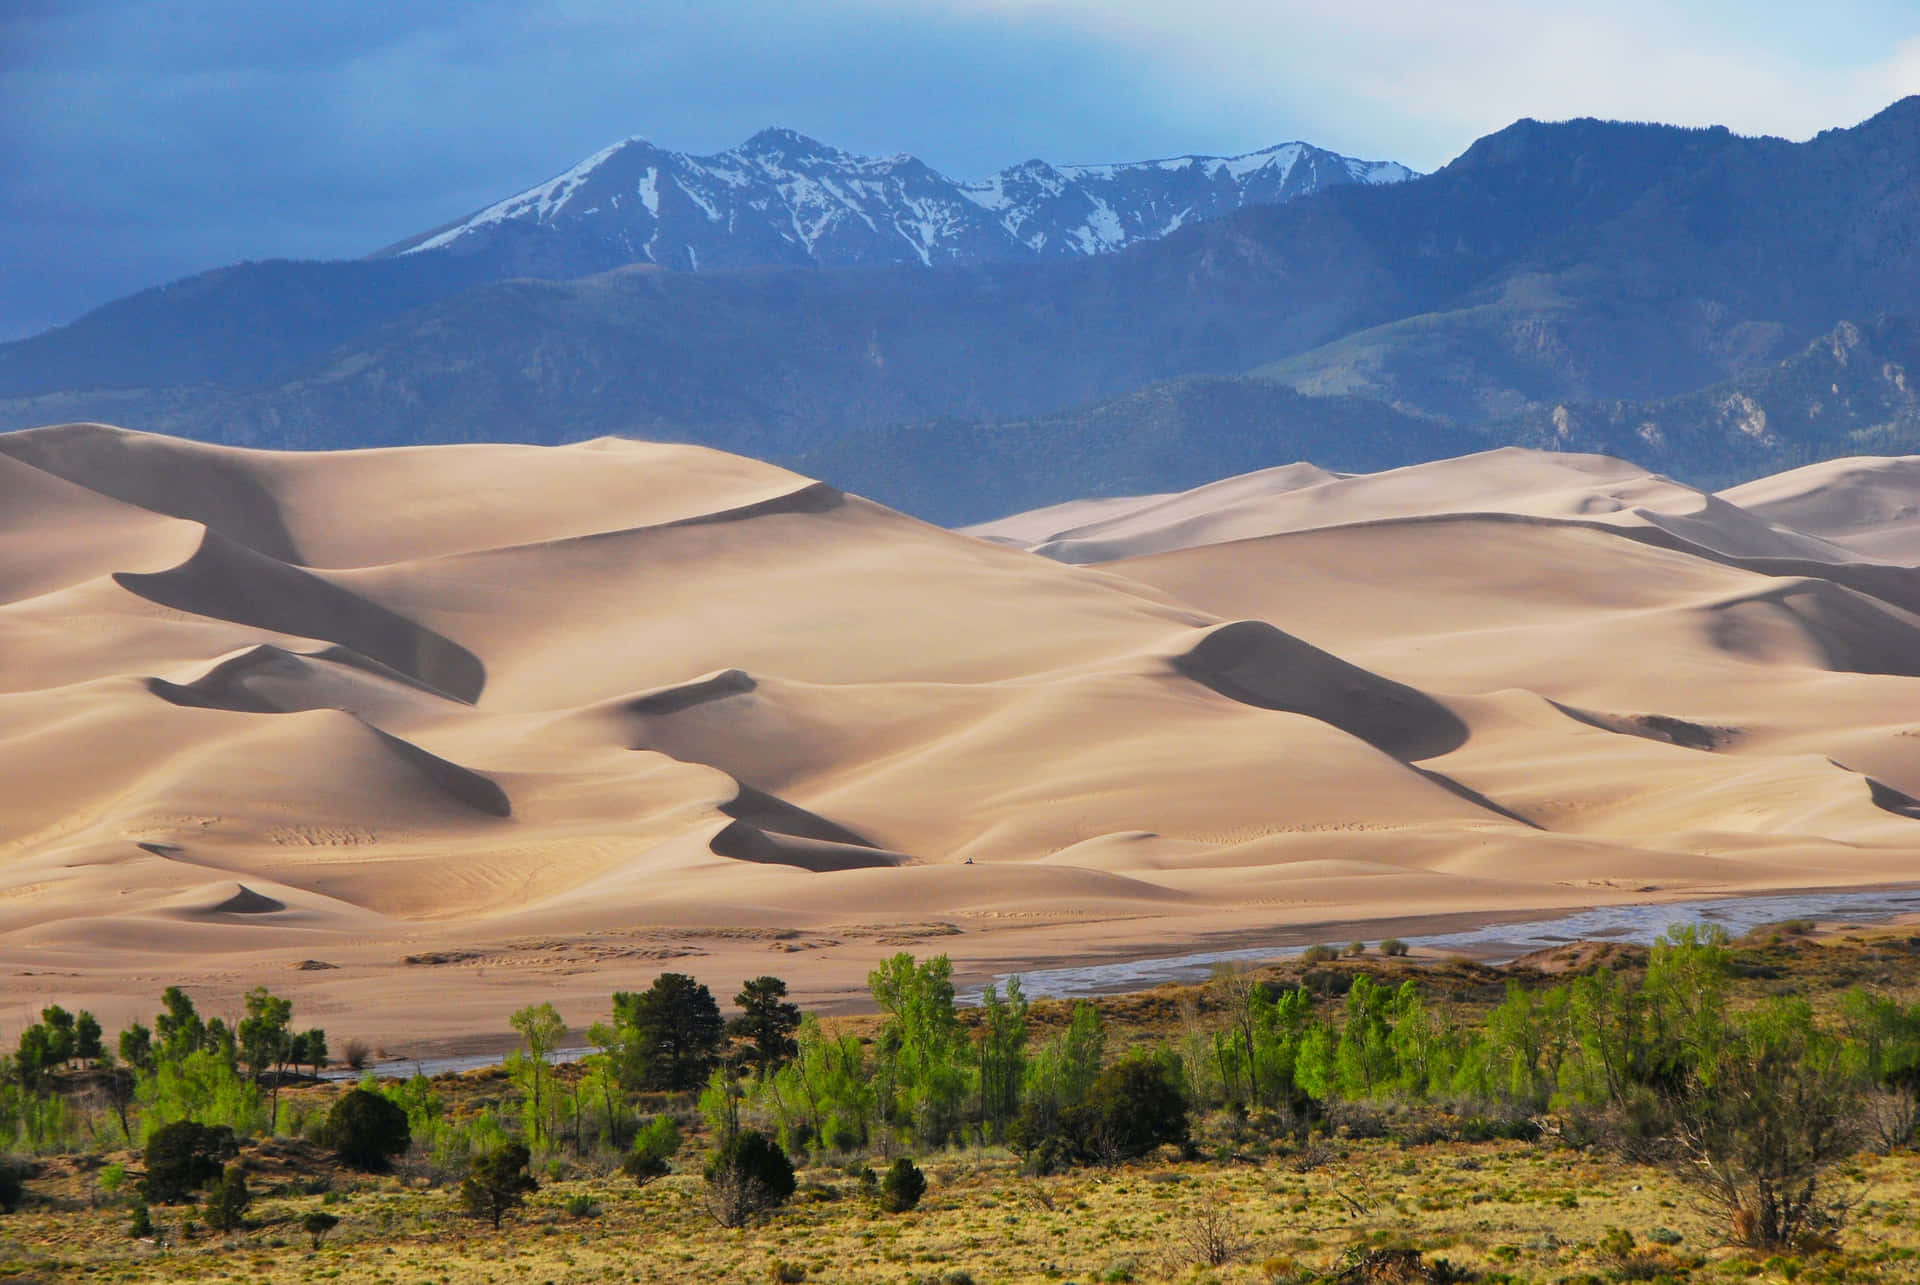 A sand dune seen in a surreal desert landscape.